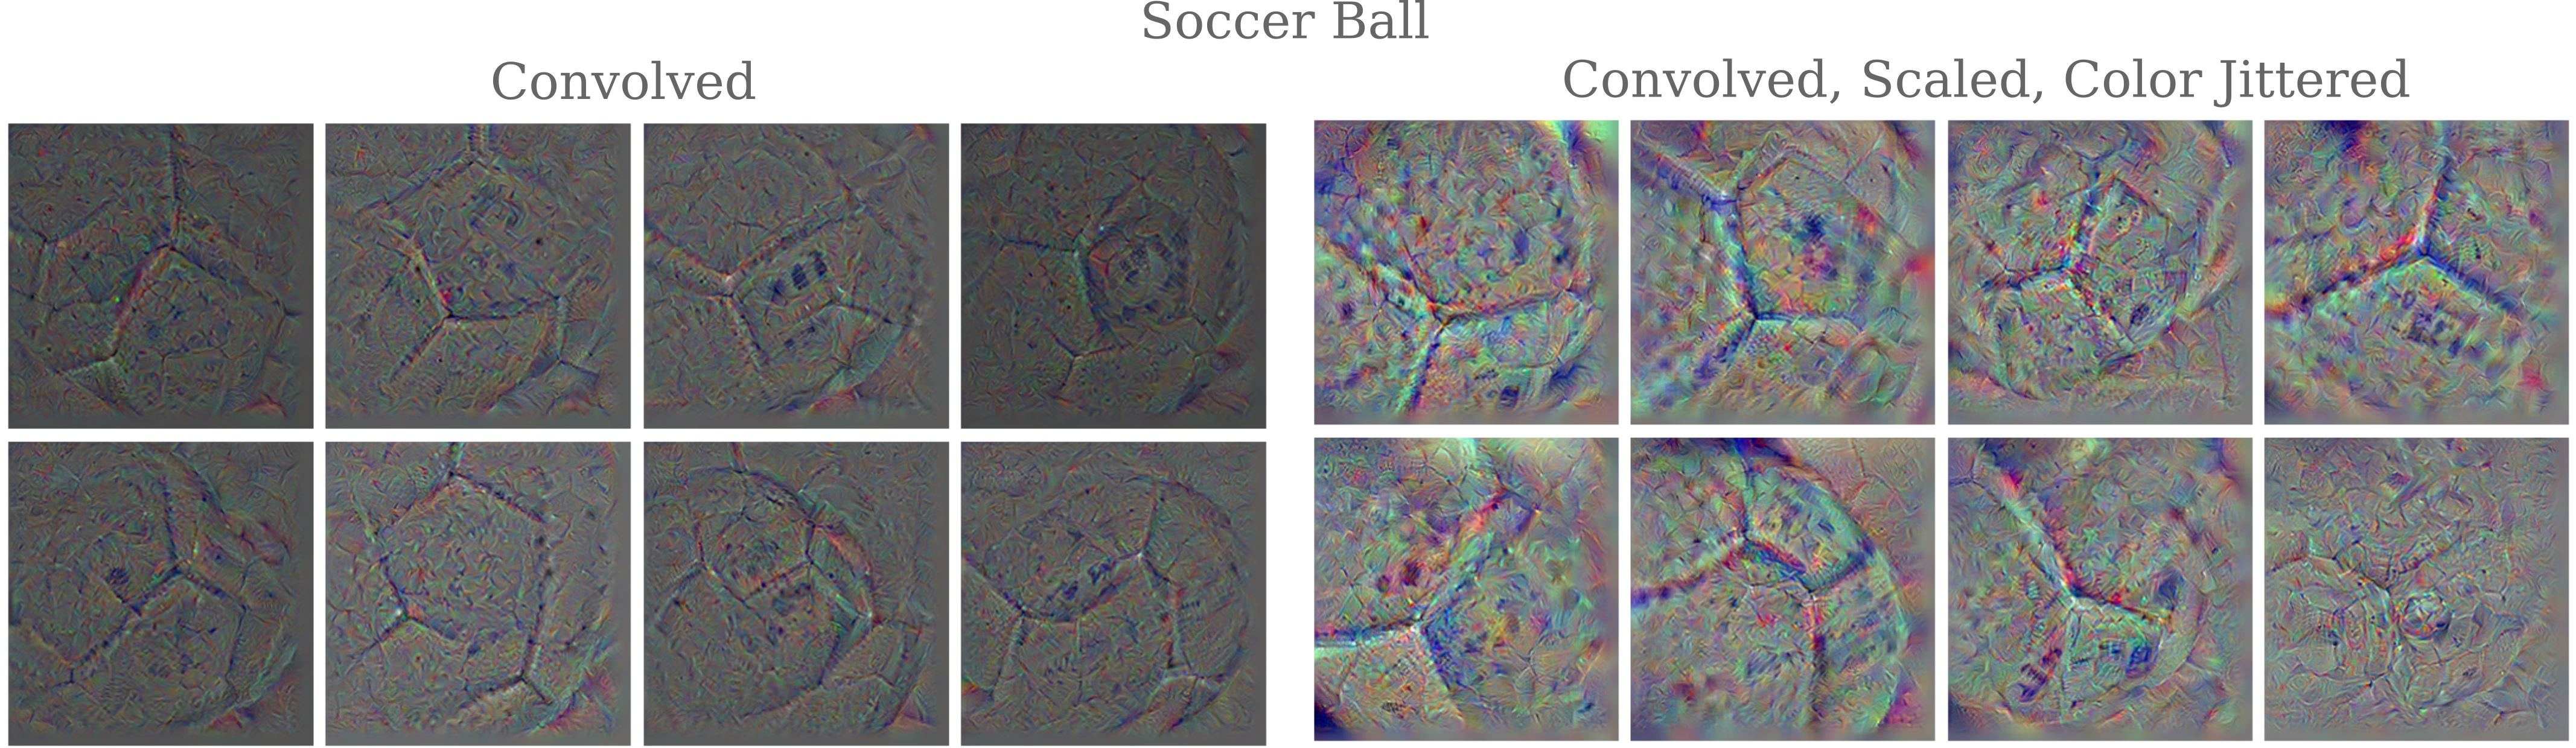 generated soccerballs